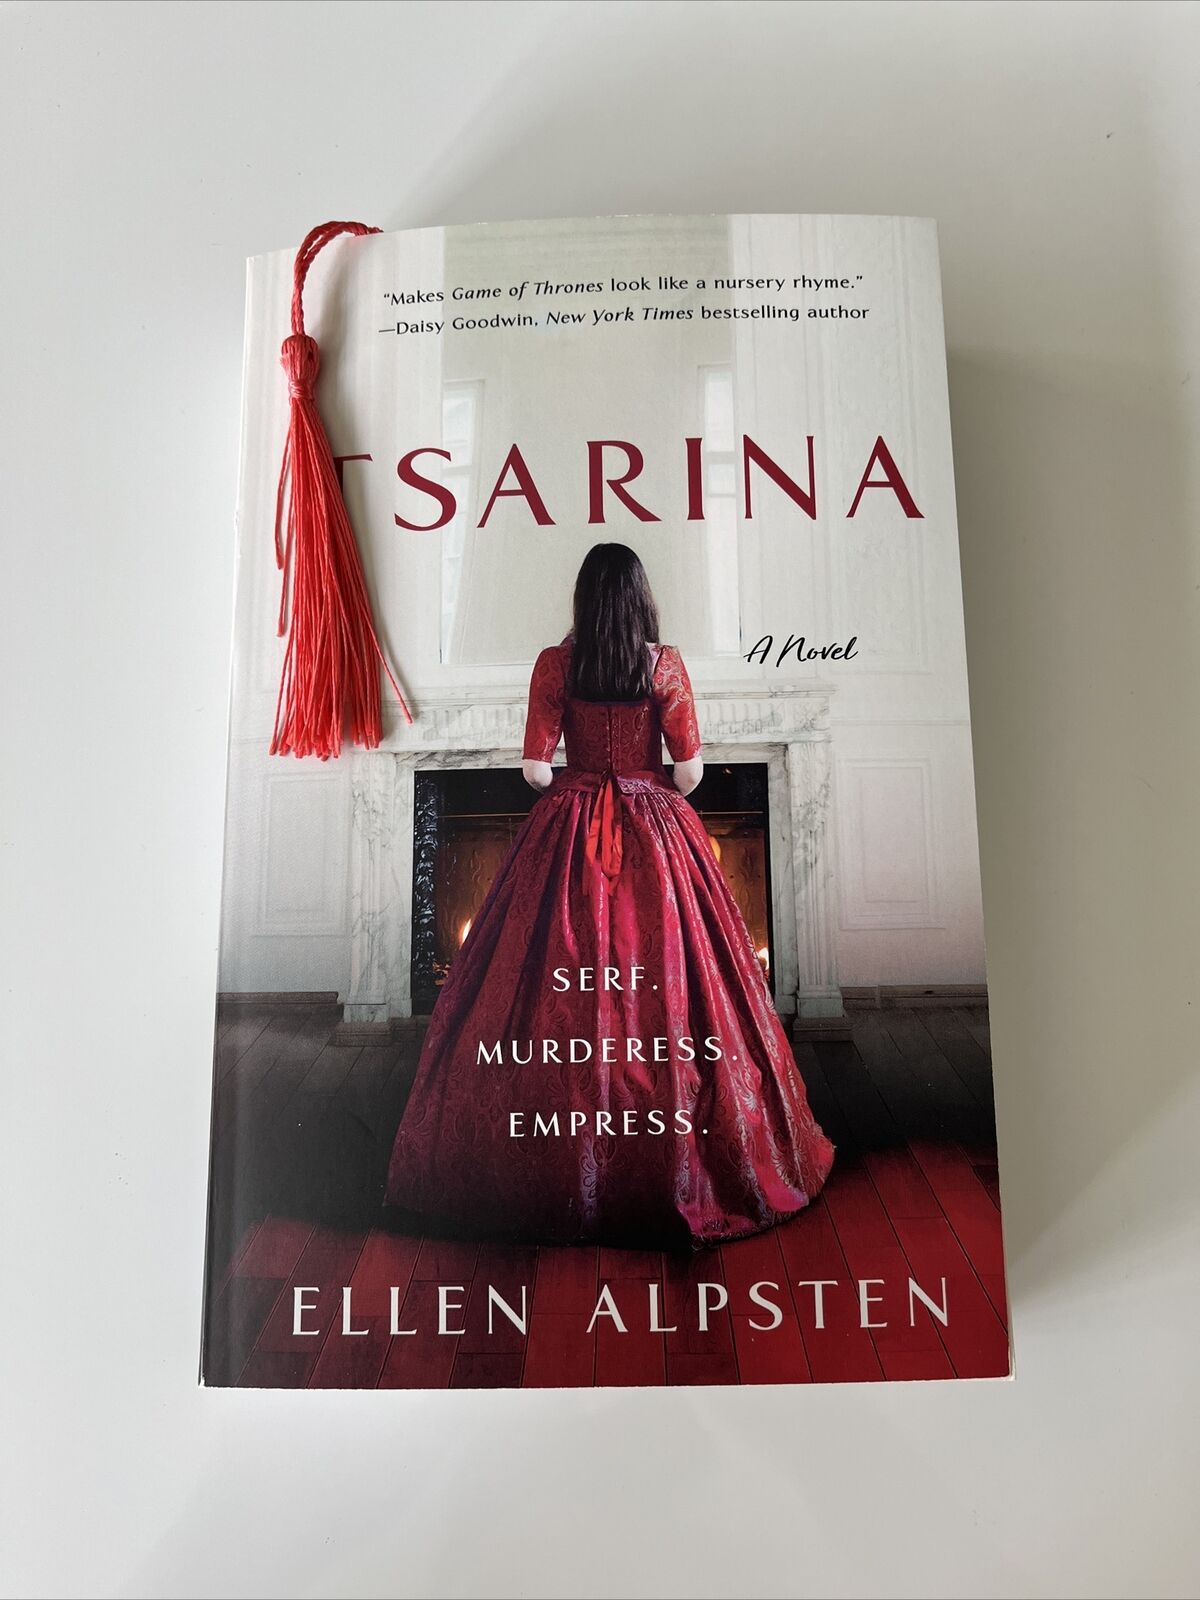 Tsarina: A Novel by Ellen Alpsten (English) Paperback with free bookmark